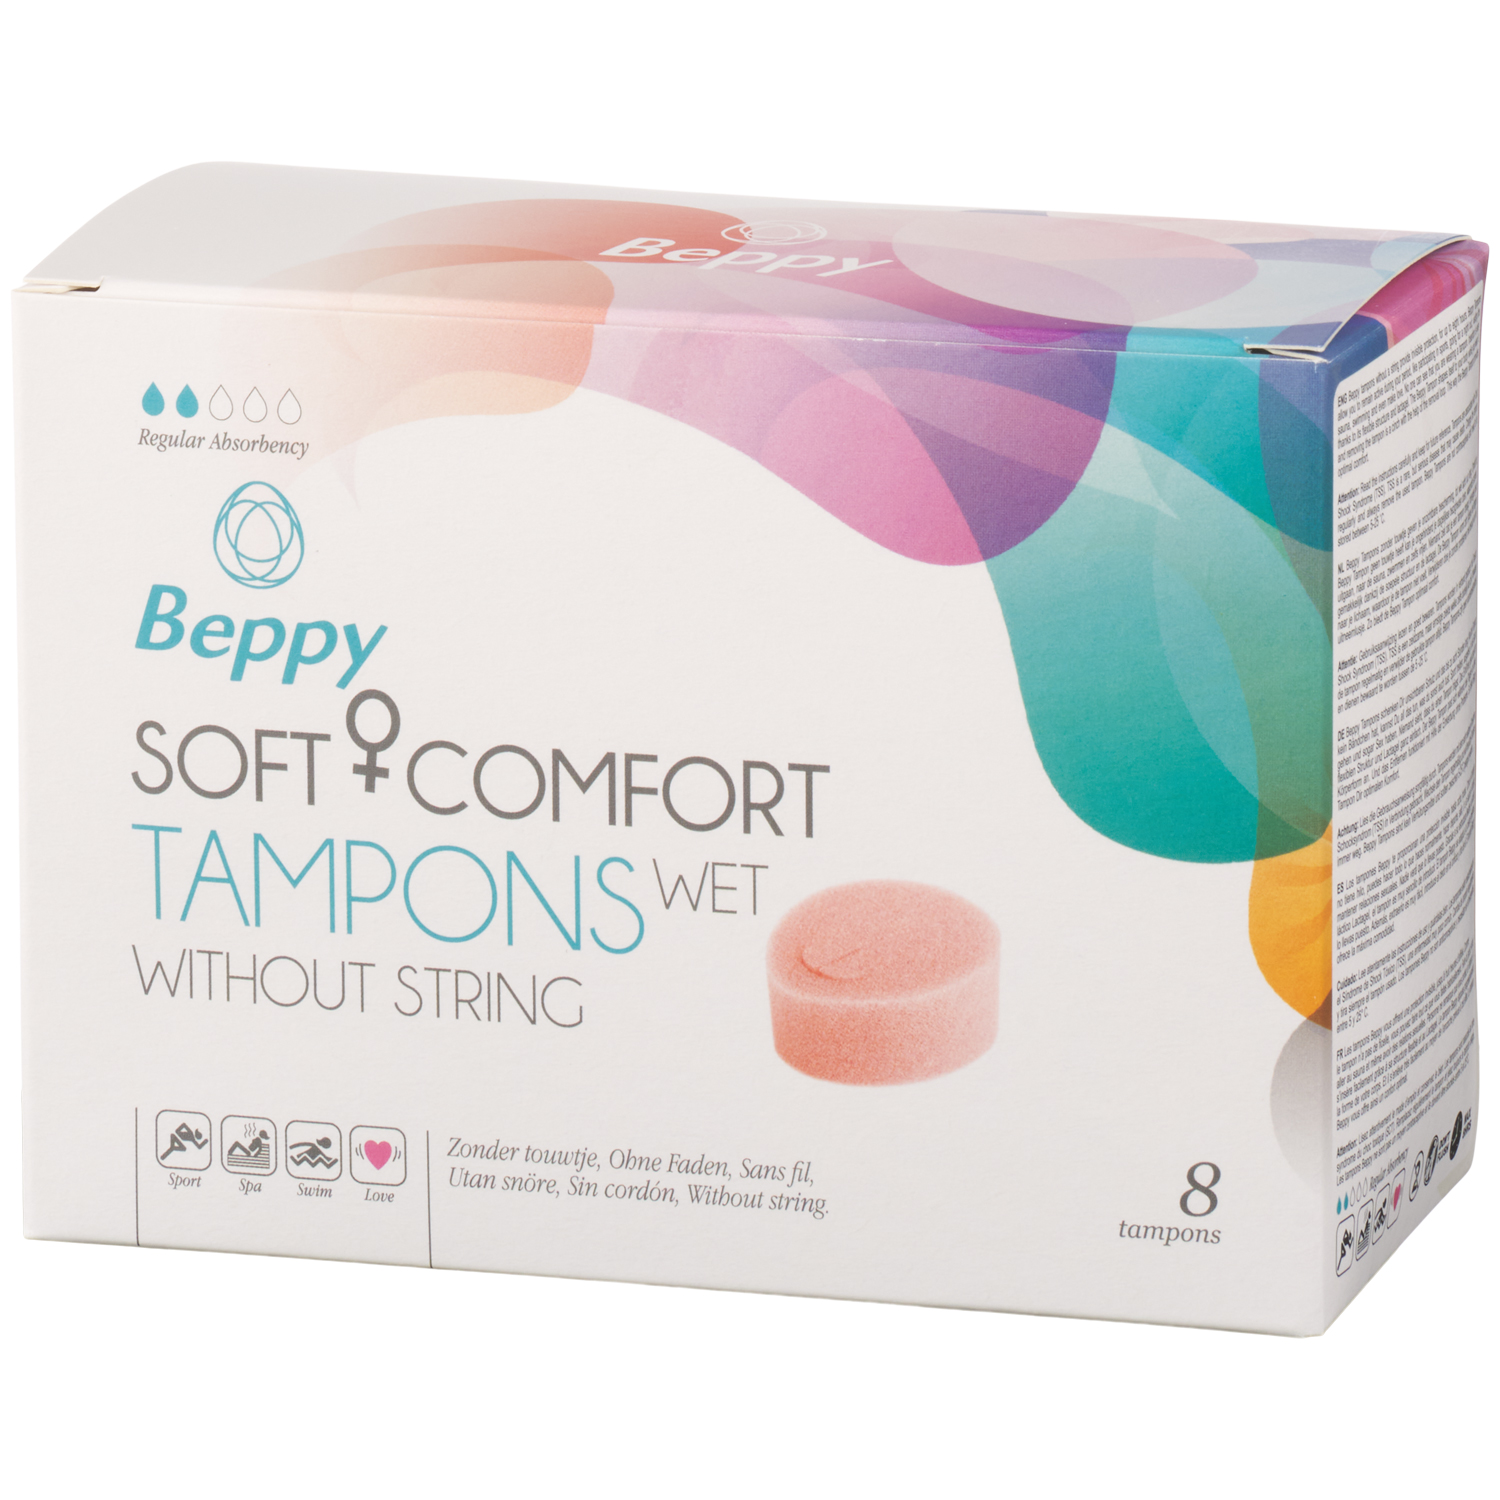 Beppy Soft + Comfort Tampons Wet 8 pcs   - Rosa thumbnail